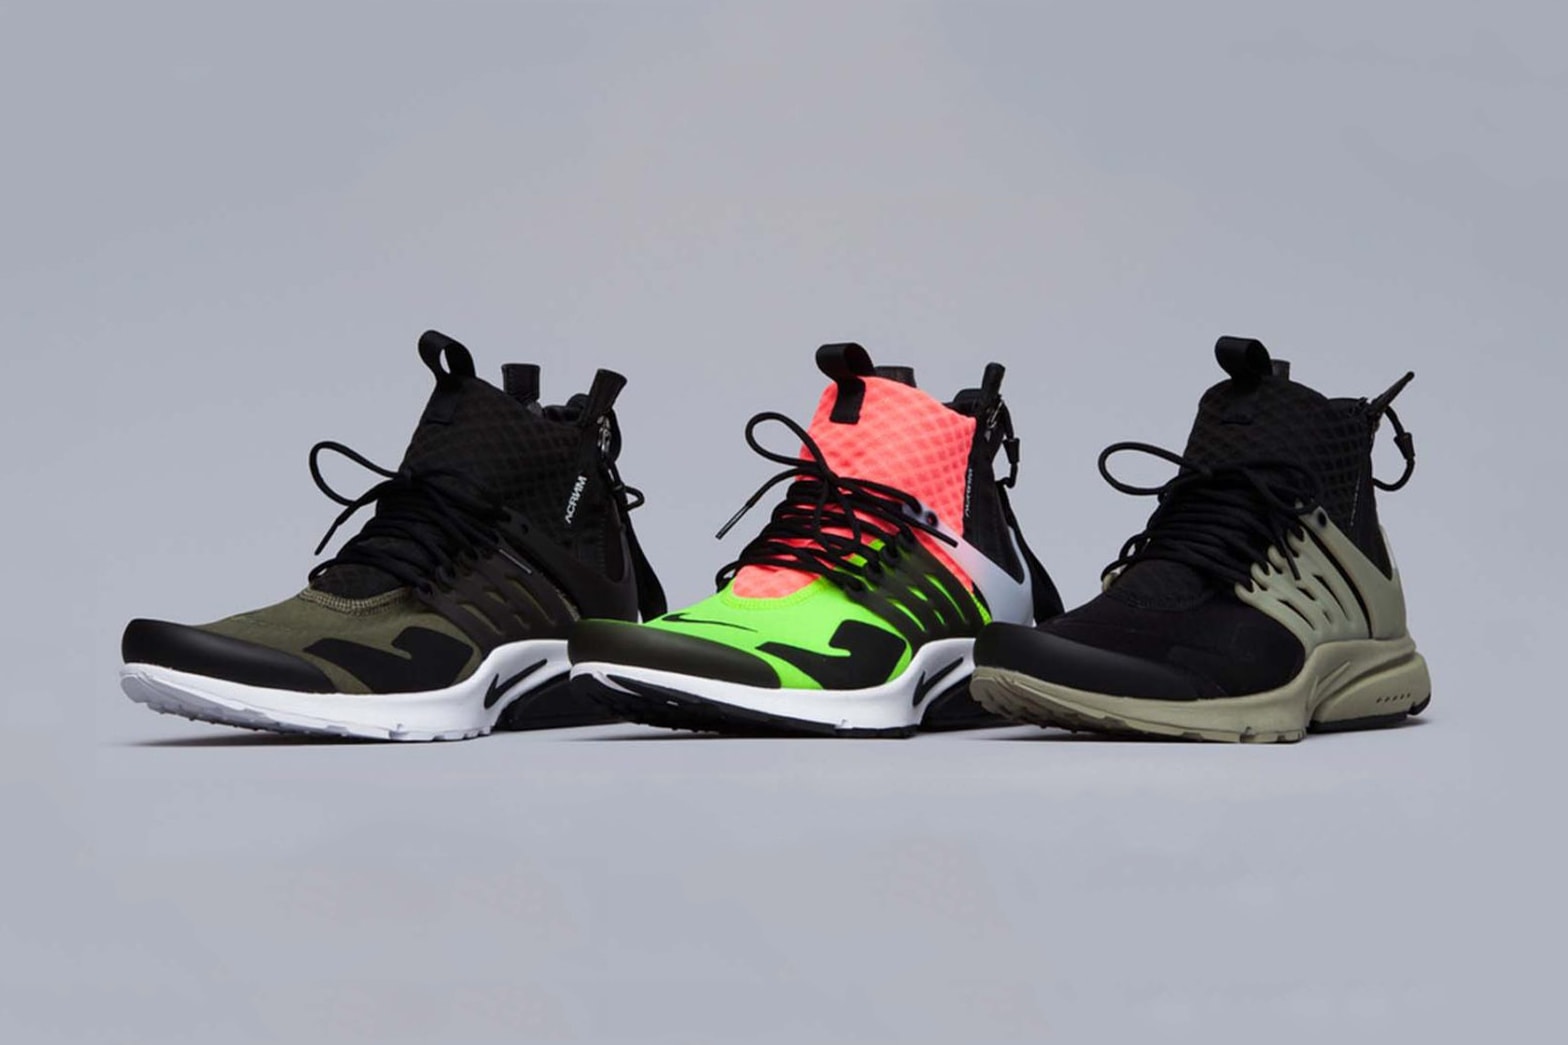 Nike Acronym Presto Sneakers Per Second